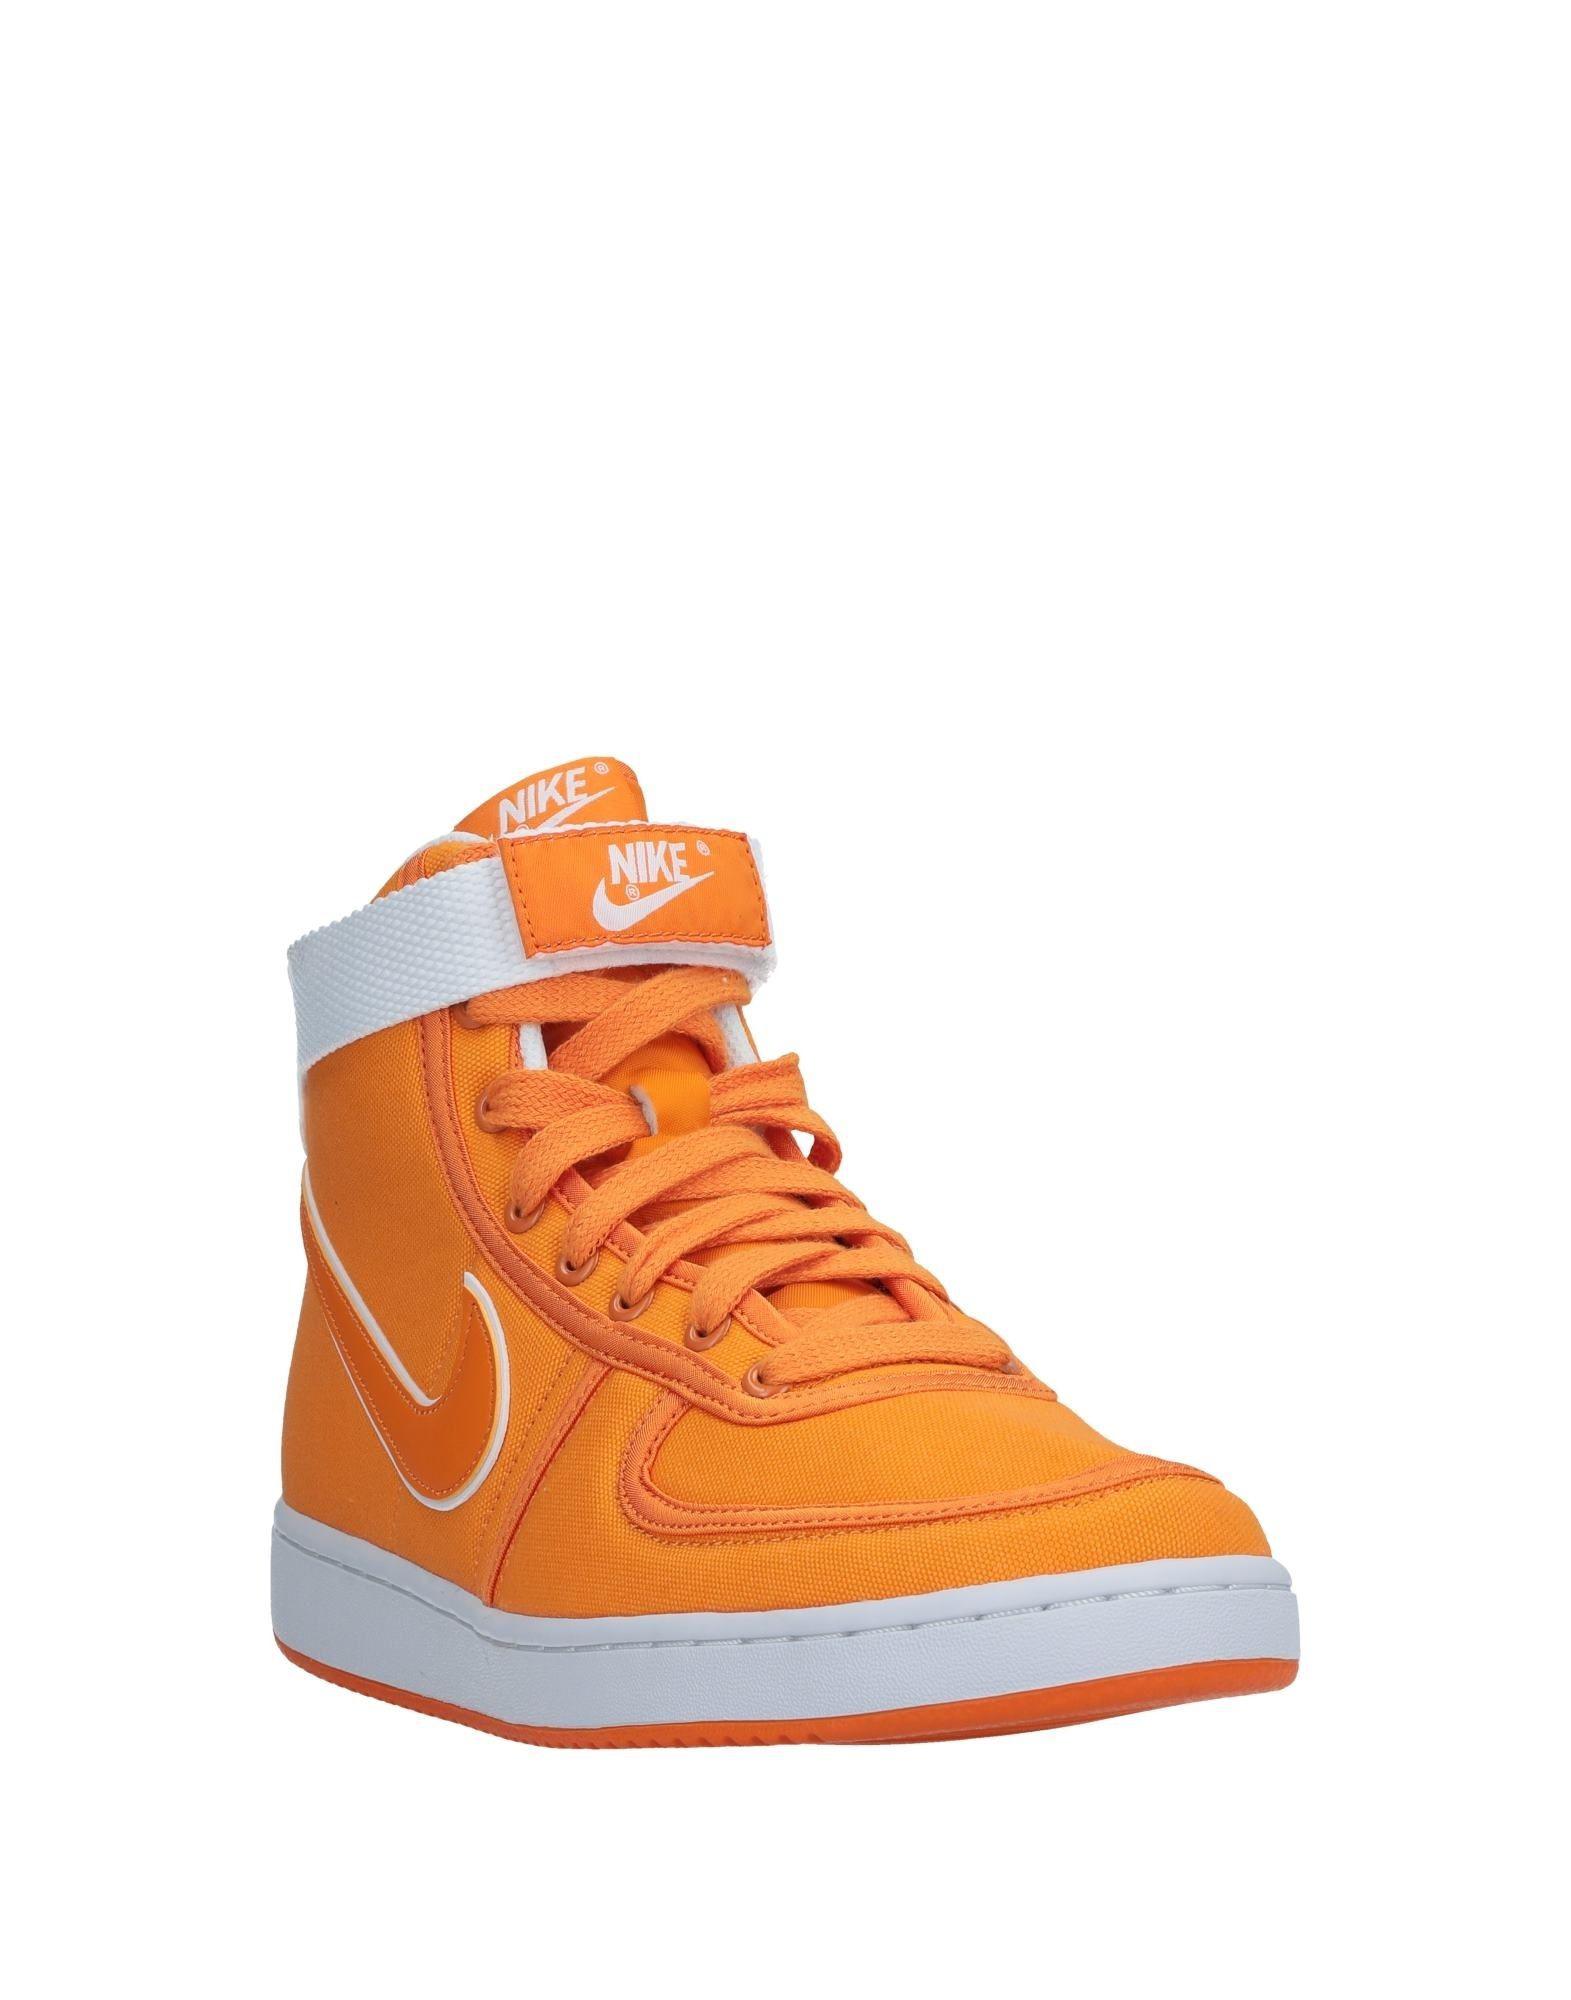 Nike Canvas High-tops & Sneakers in Orange for Men - Lyst